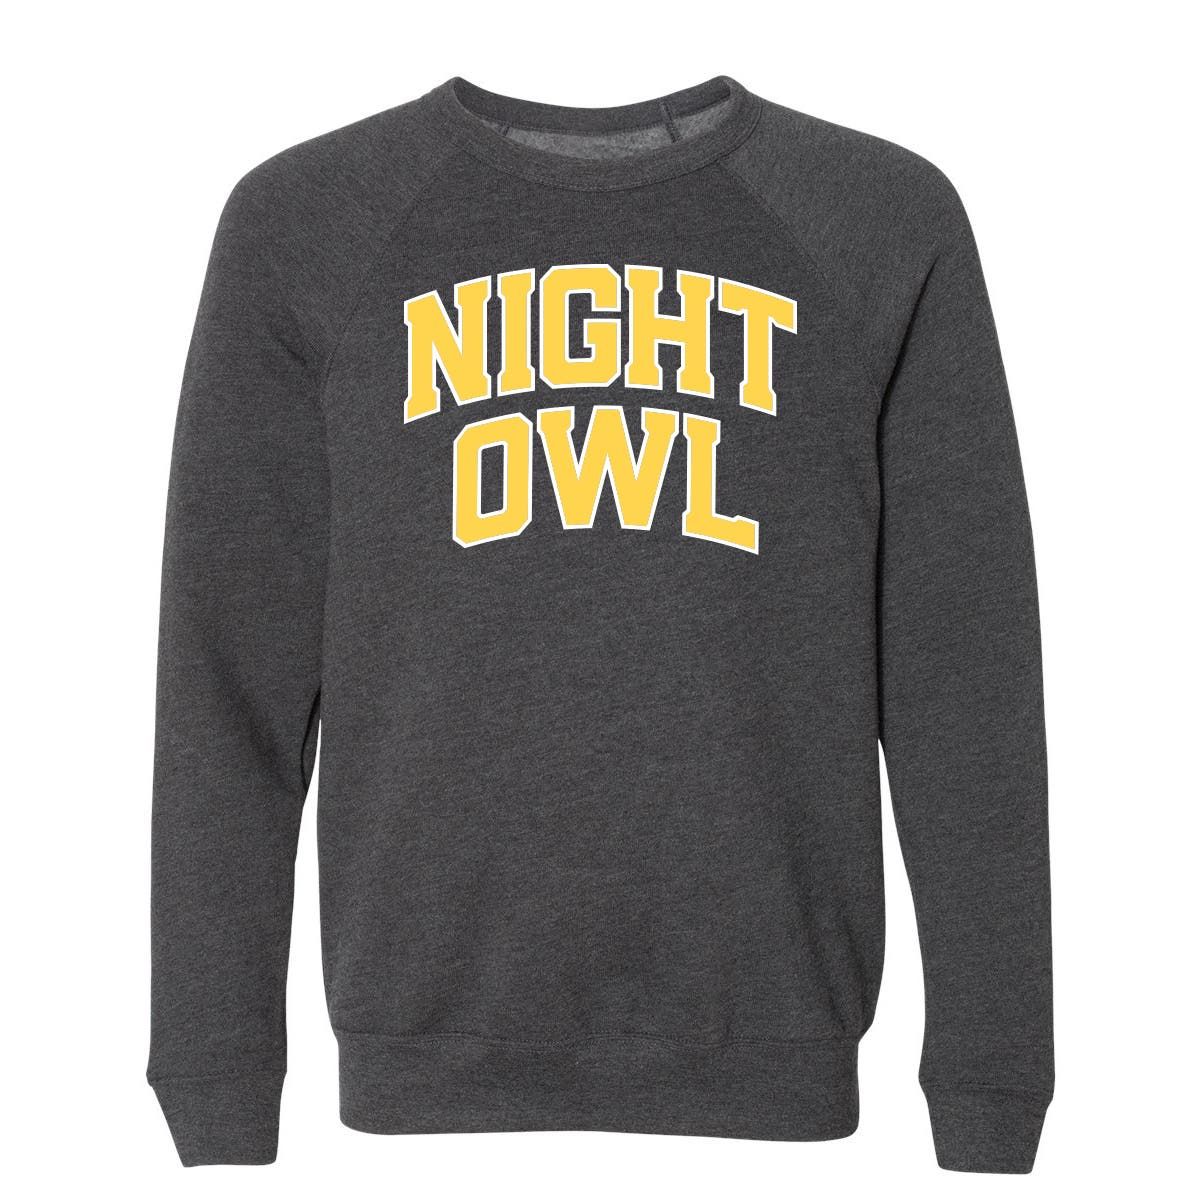 The Night Owl Sweatshirt 